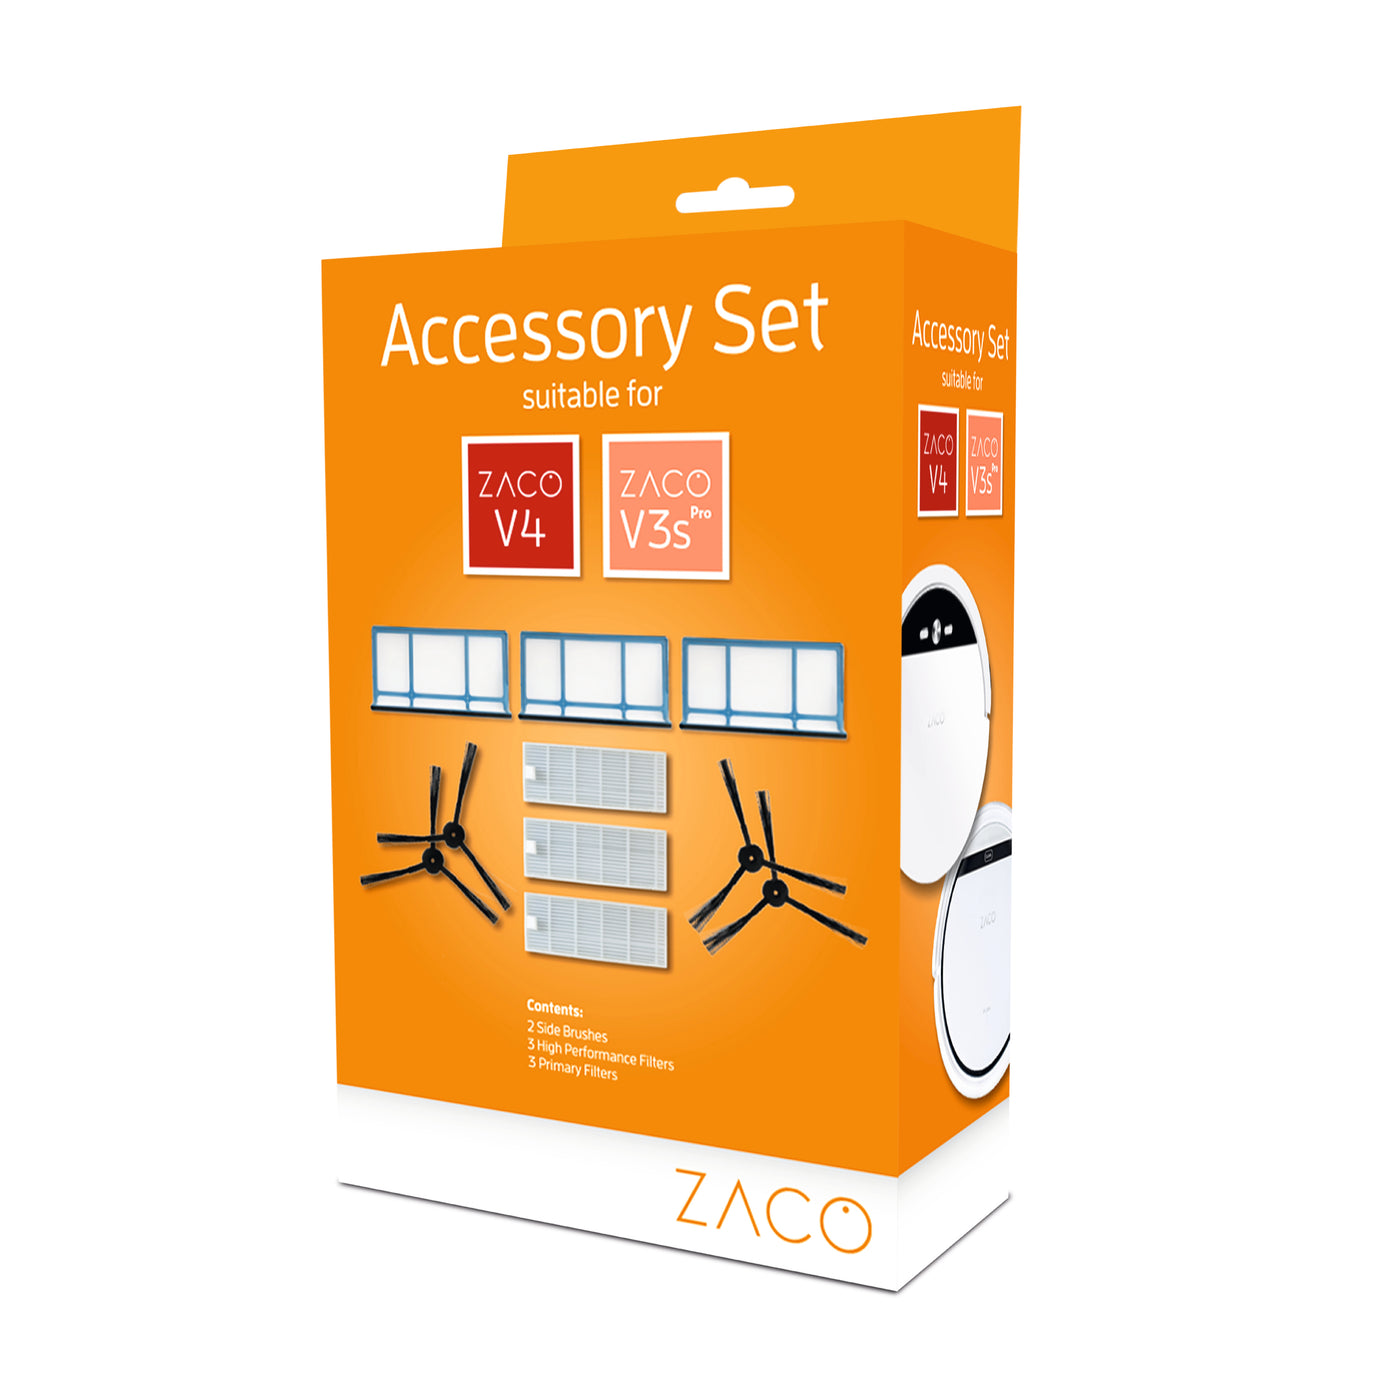 Accessory set for ZACO V3sPro and V4